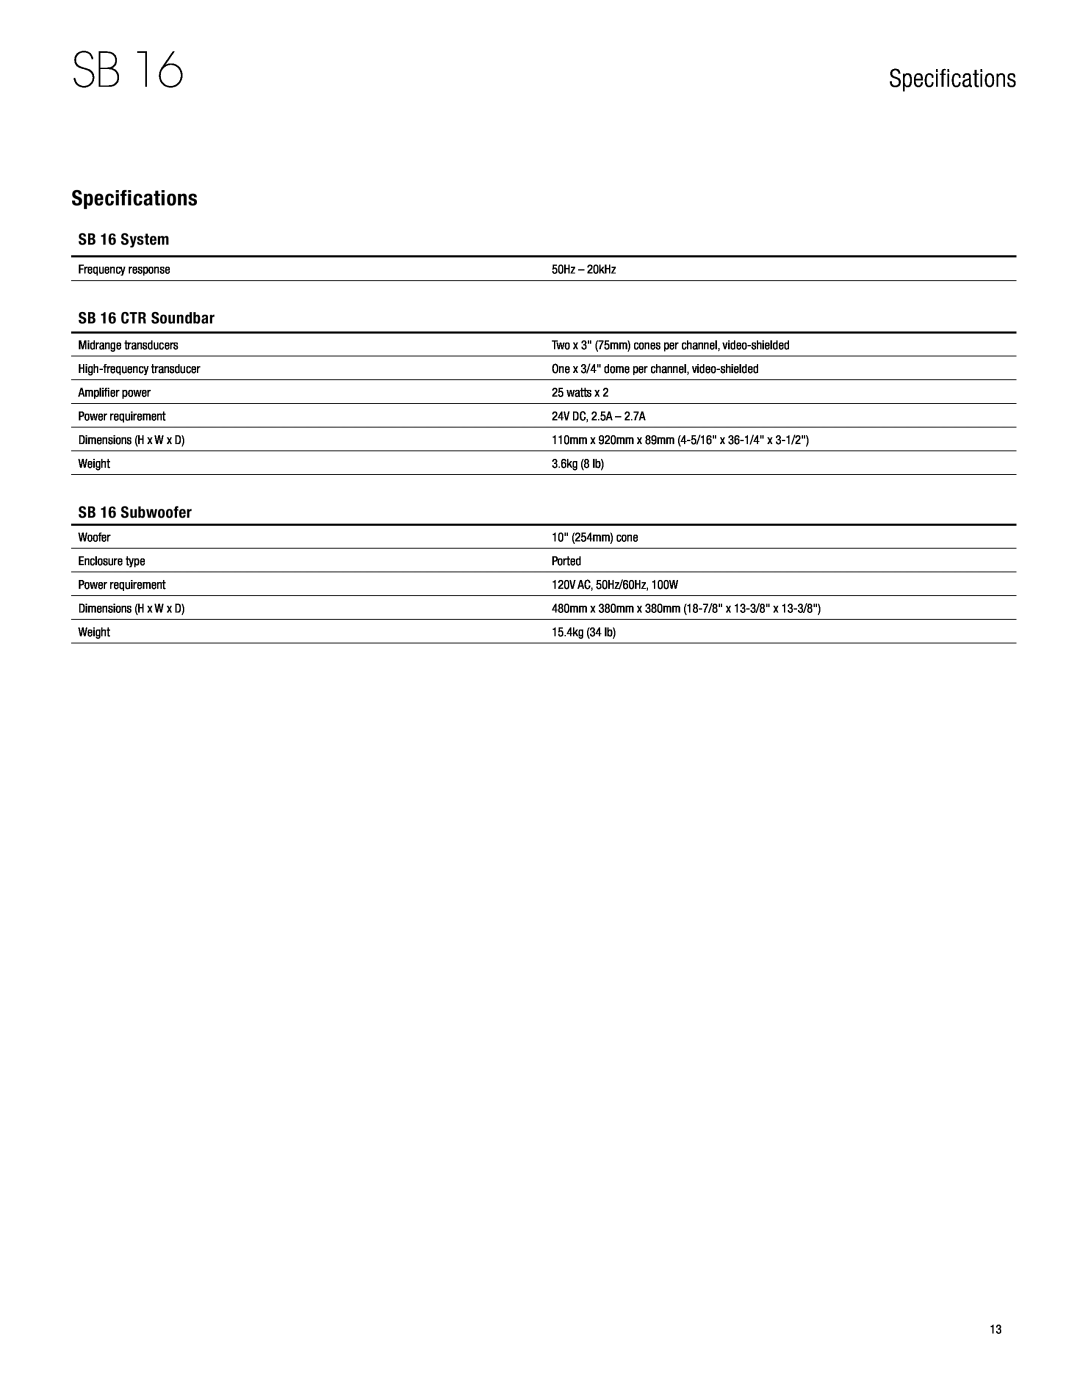 Harman-Kardon owner manual Specifications, SB 16 System, SB 16 CTR Soundbar, SB 16 Subwoofer 